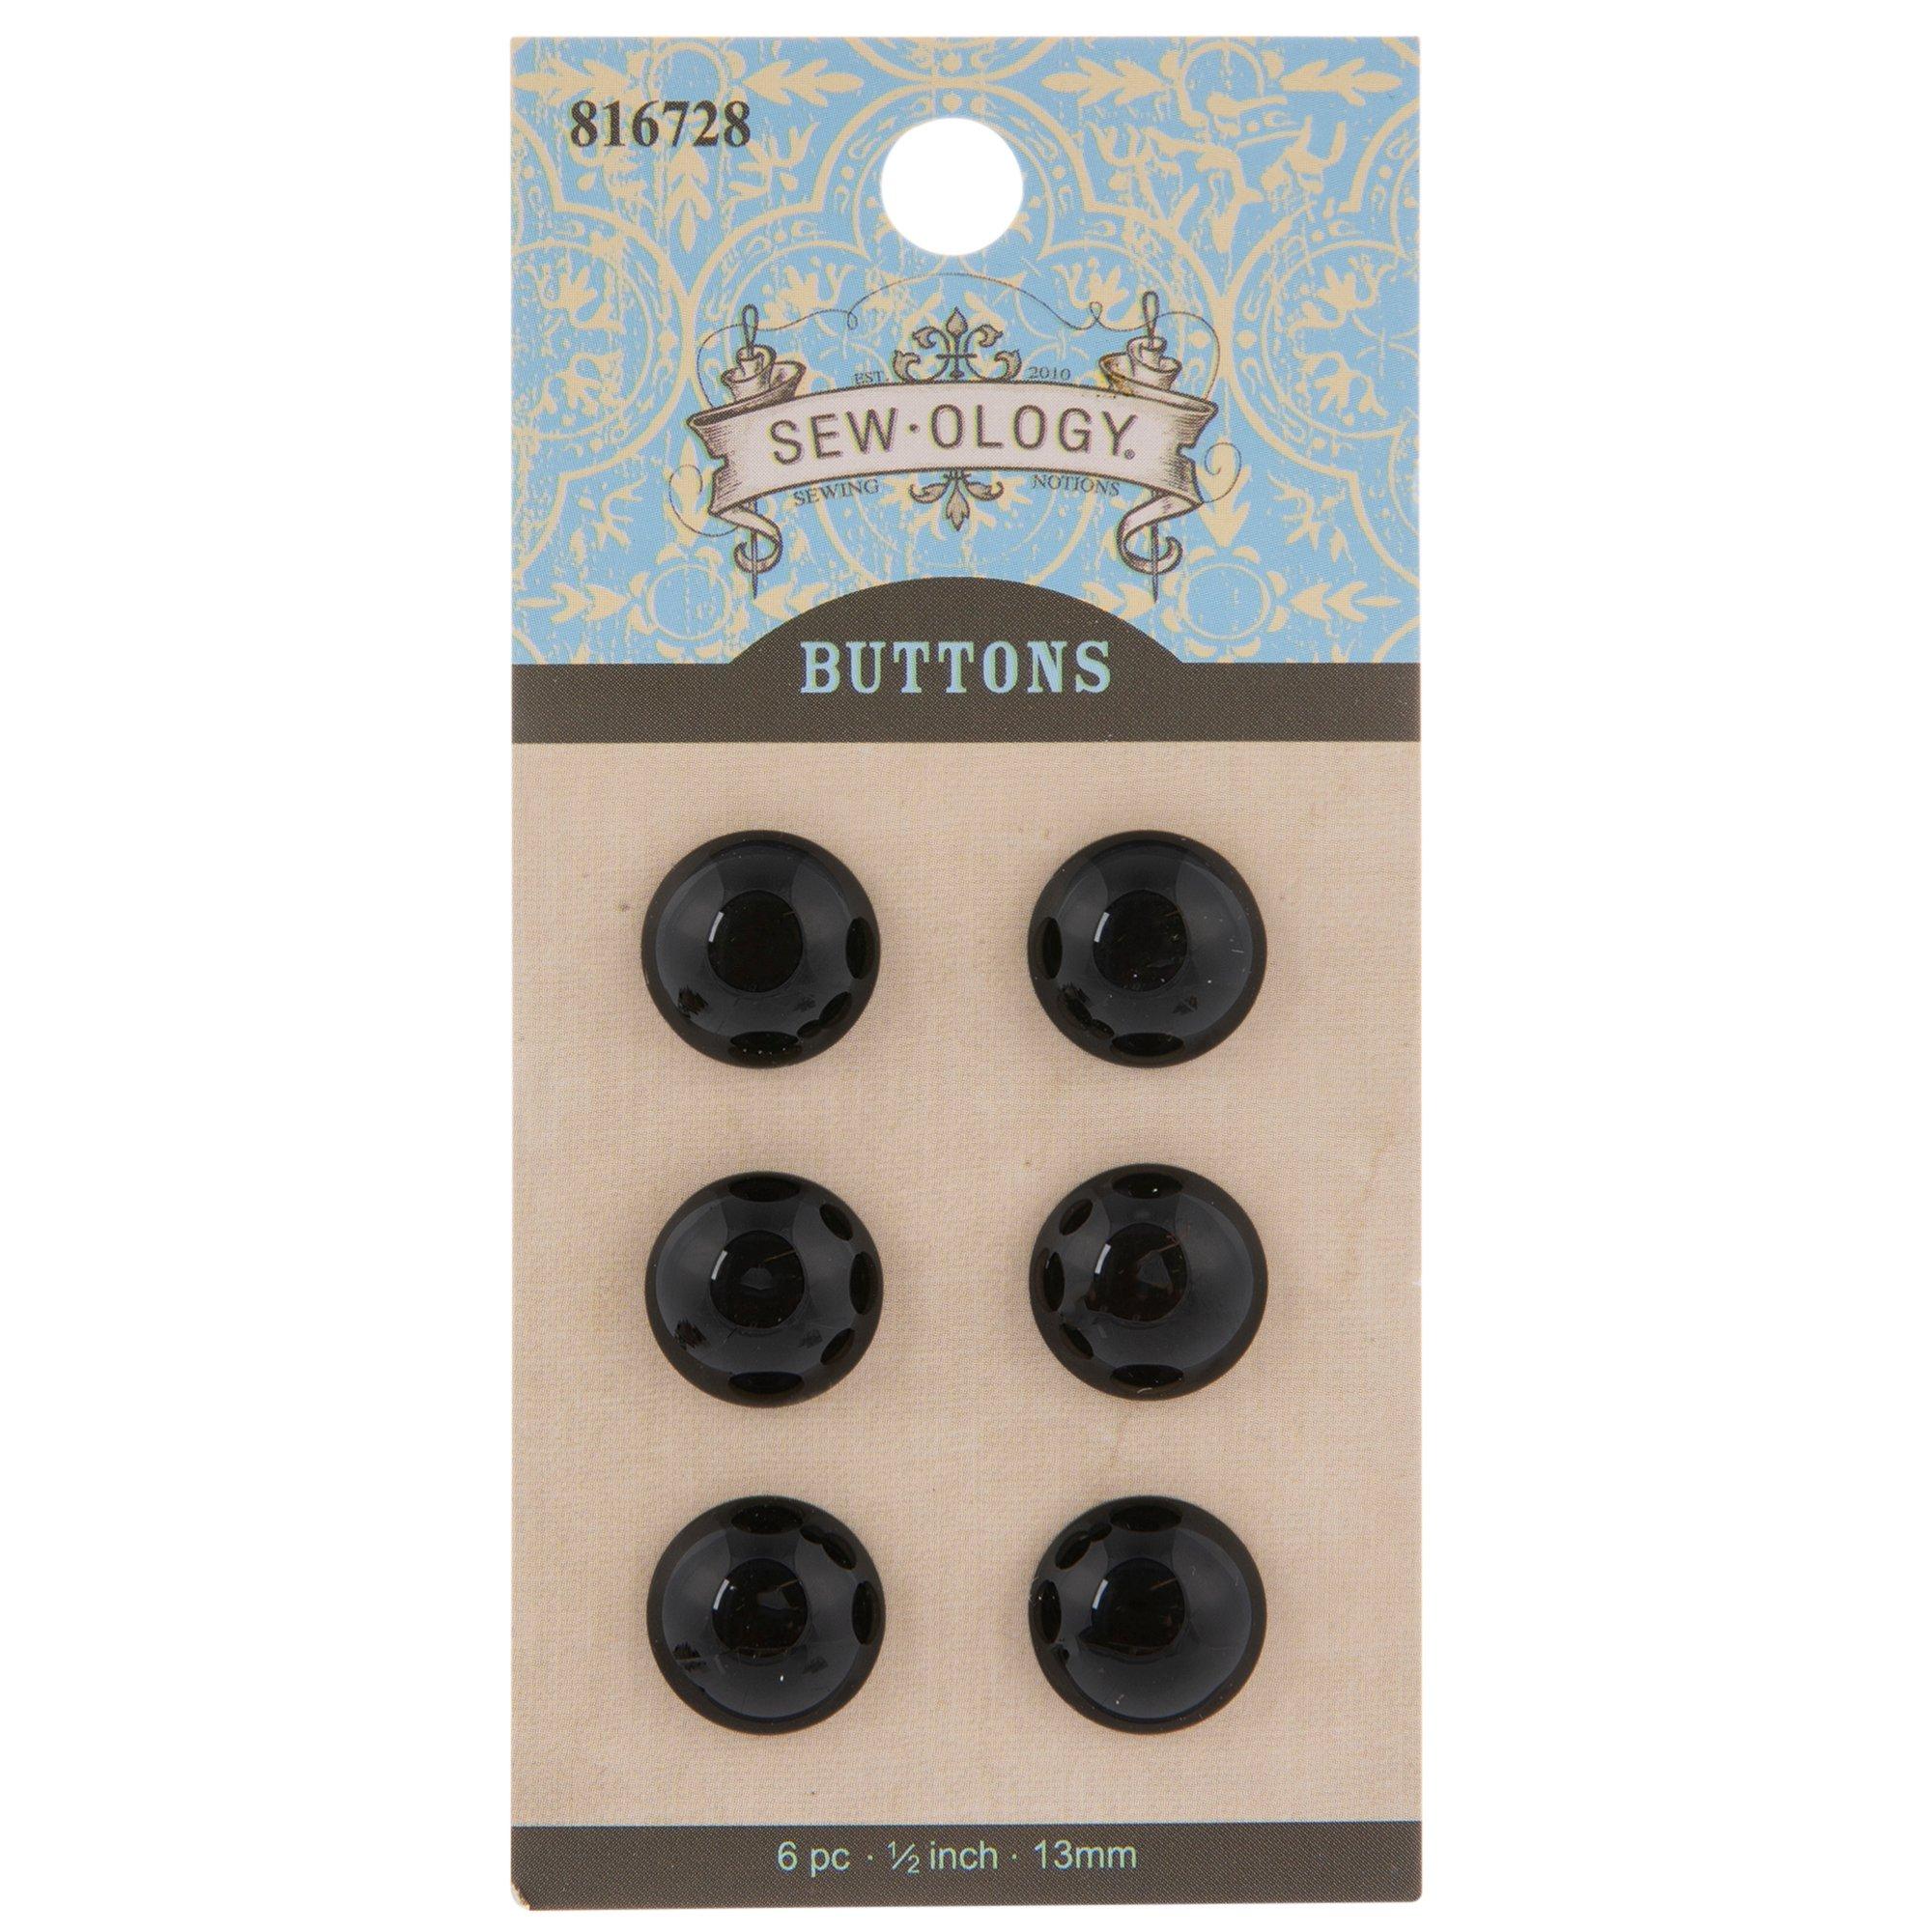 Circular Fancy Buttons with Shank Attachment, 20mm, Black & Silver Col –  Fararti